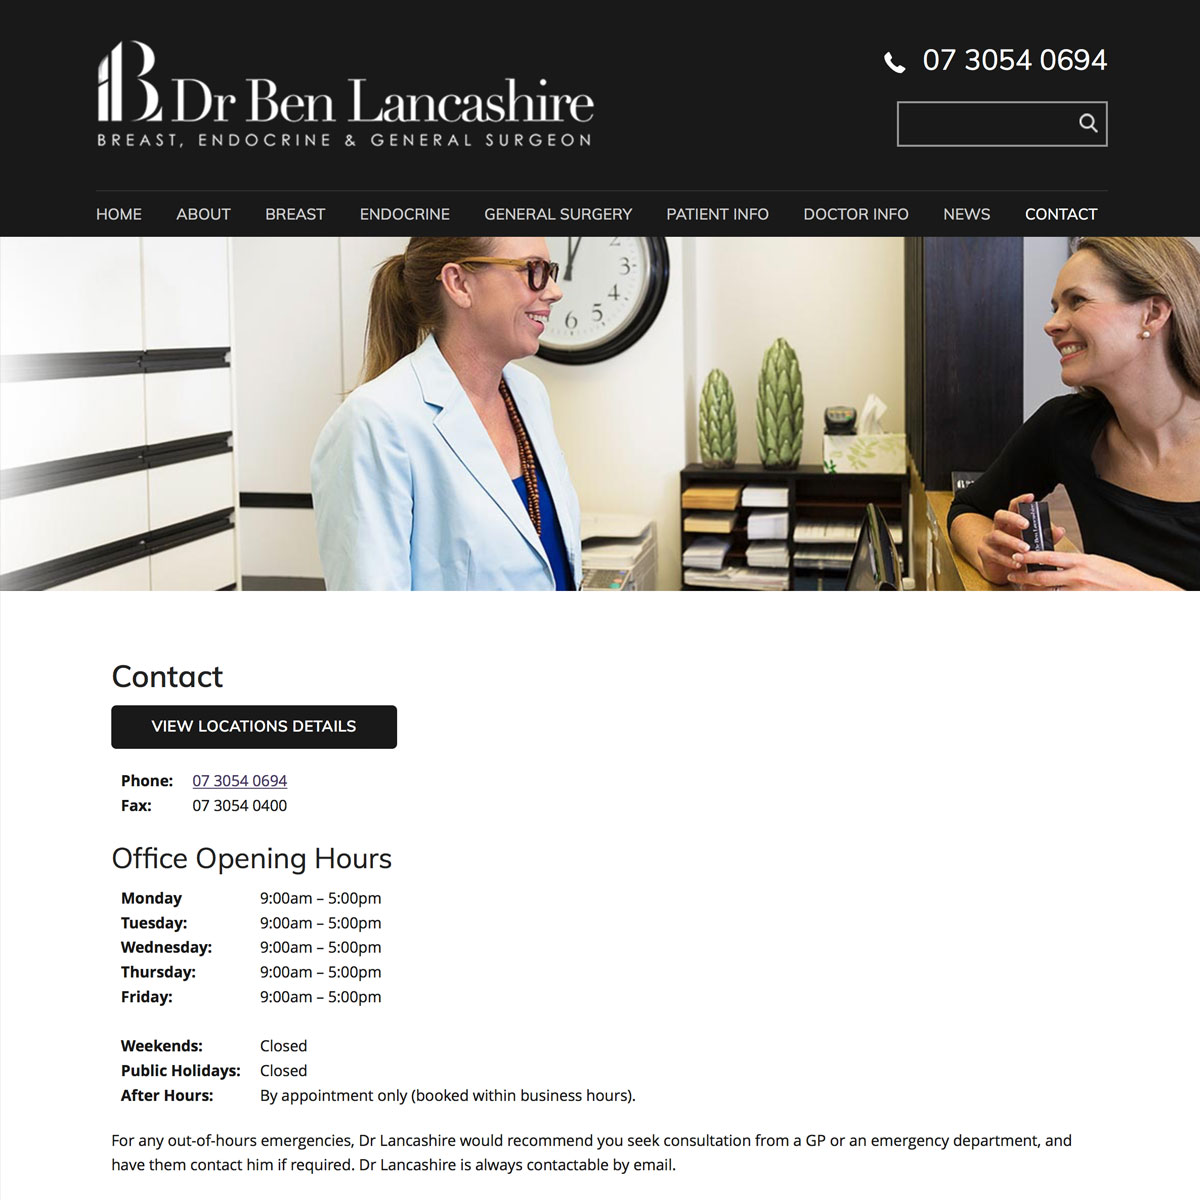 Dr Ben Lancashire - Contact